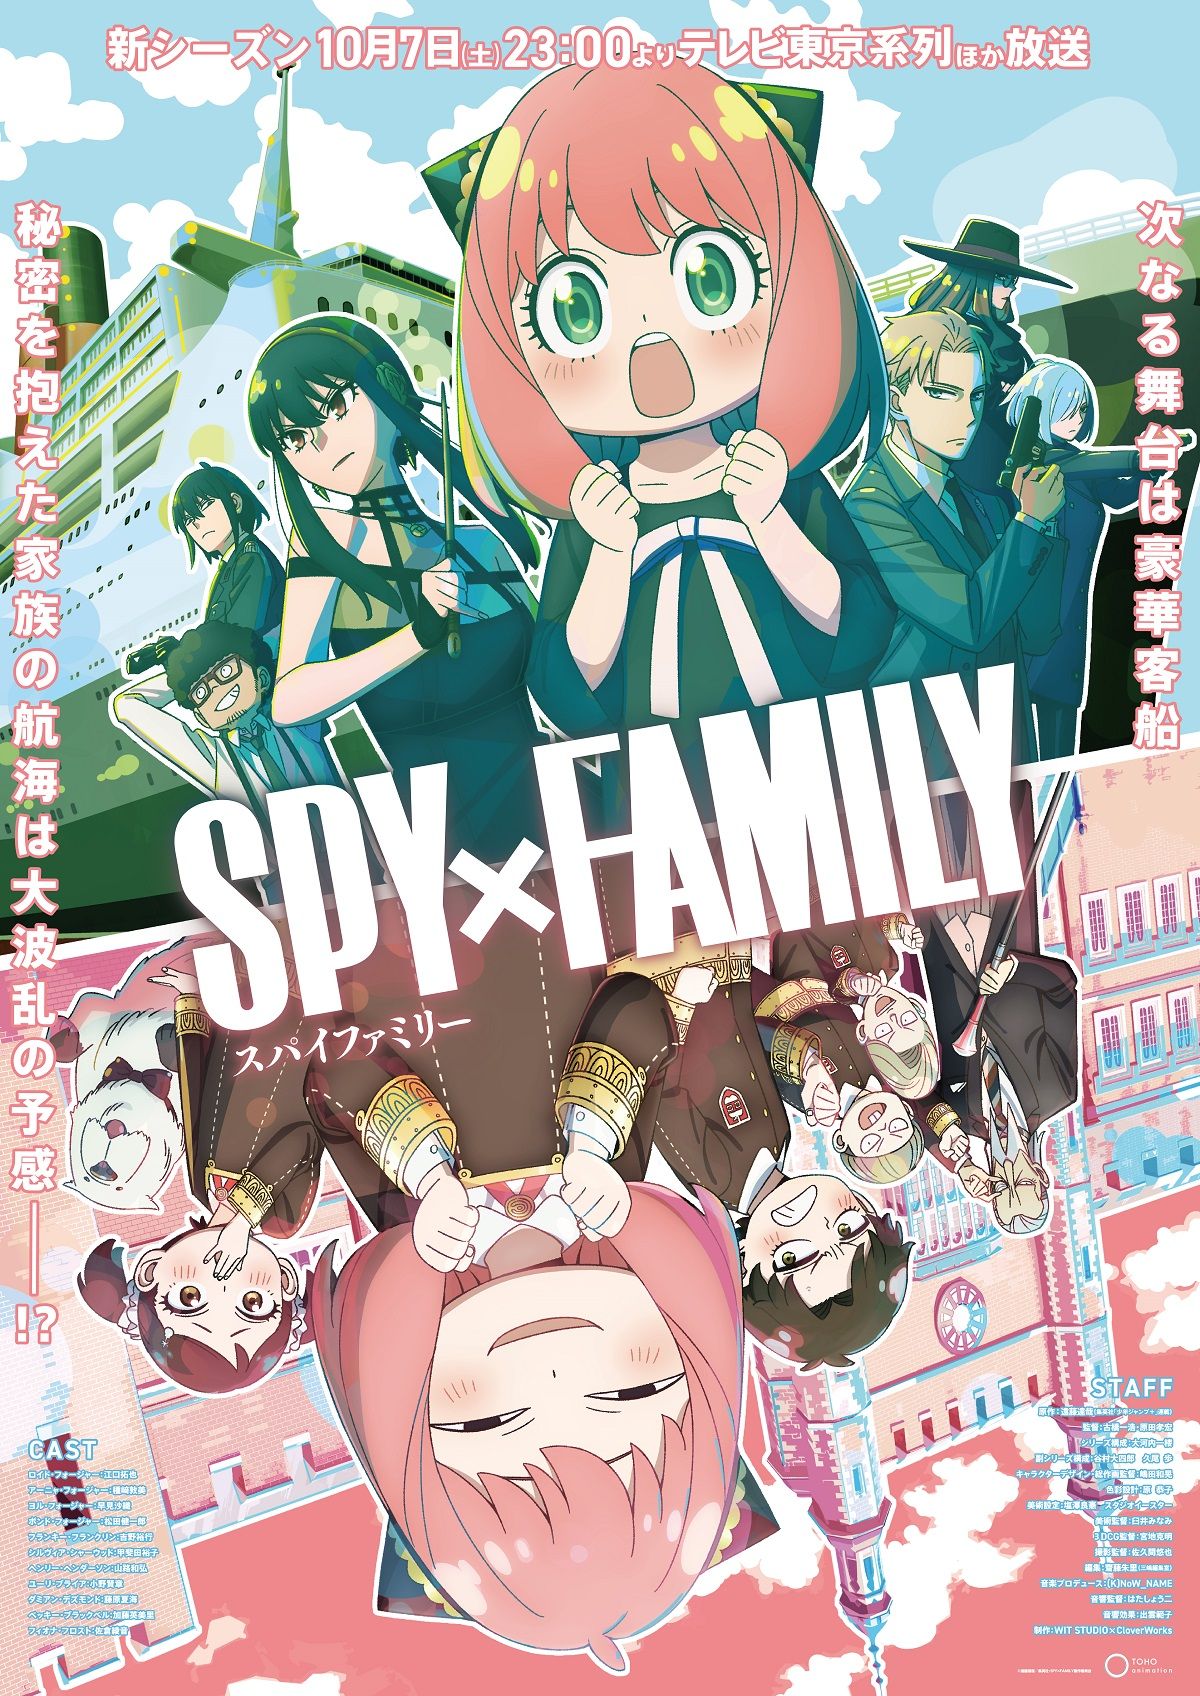 Visual Utama Spy x Family Season 2